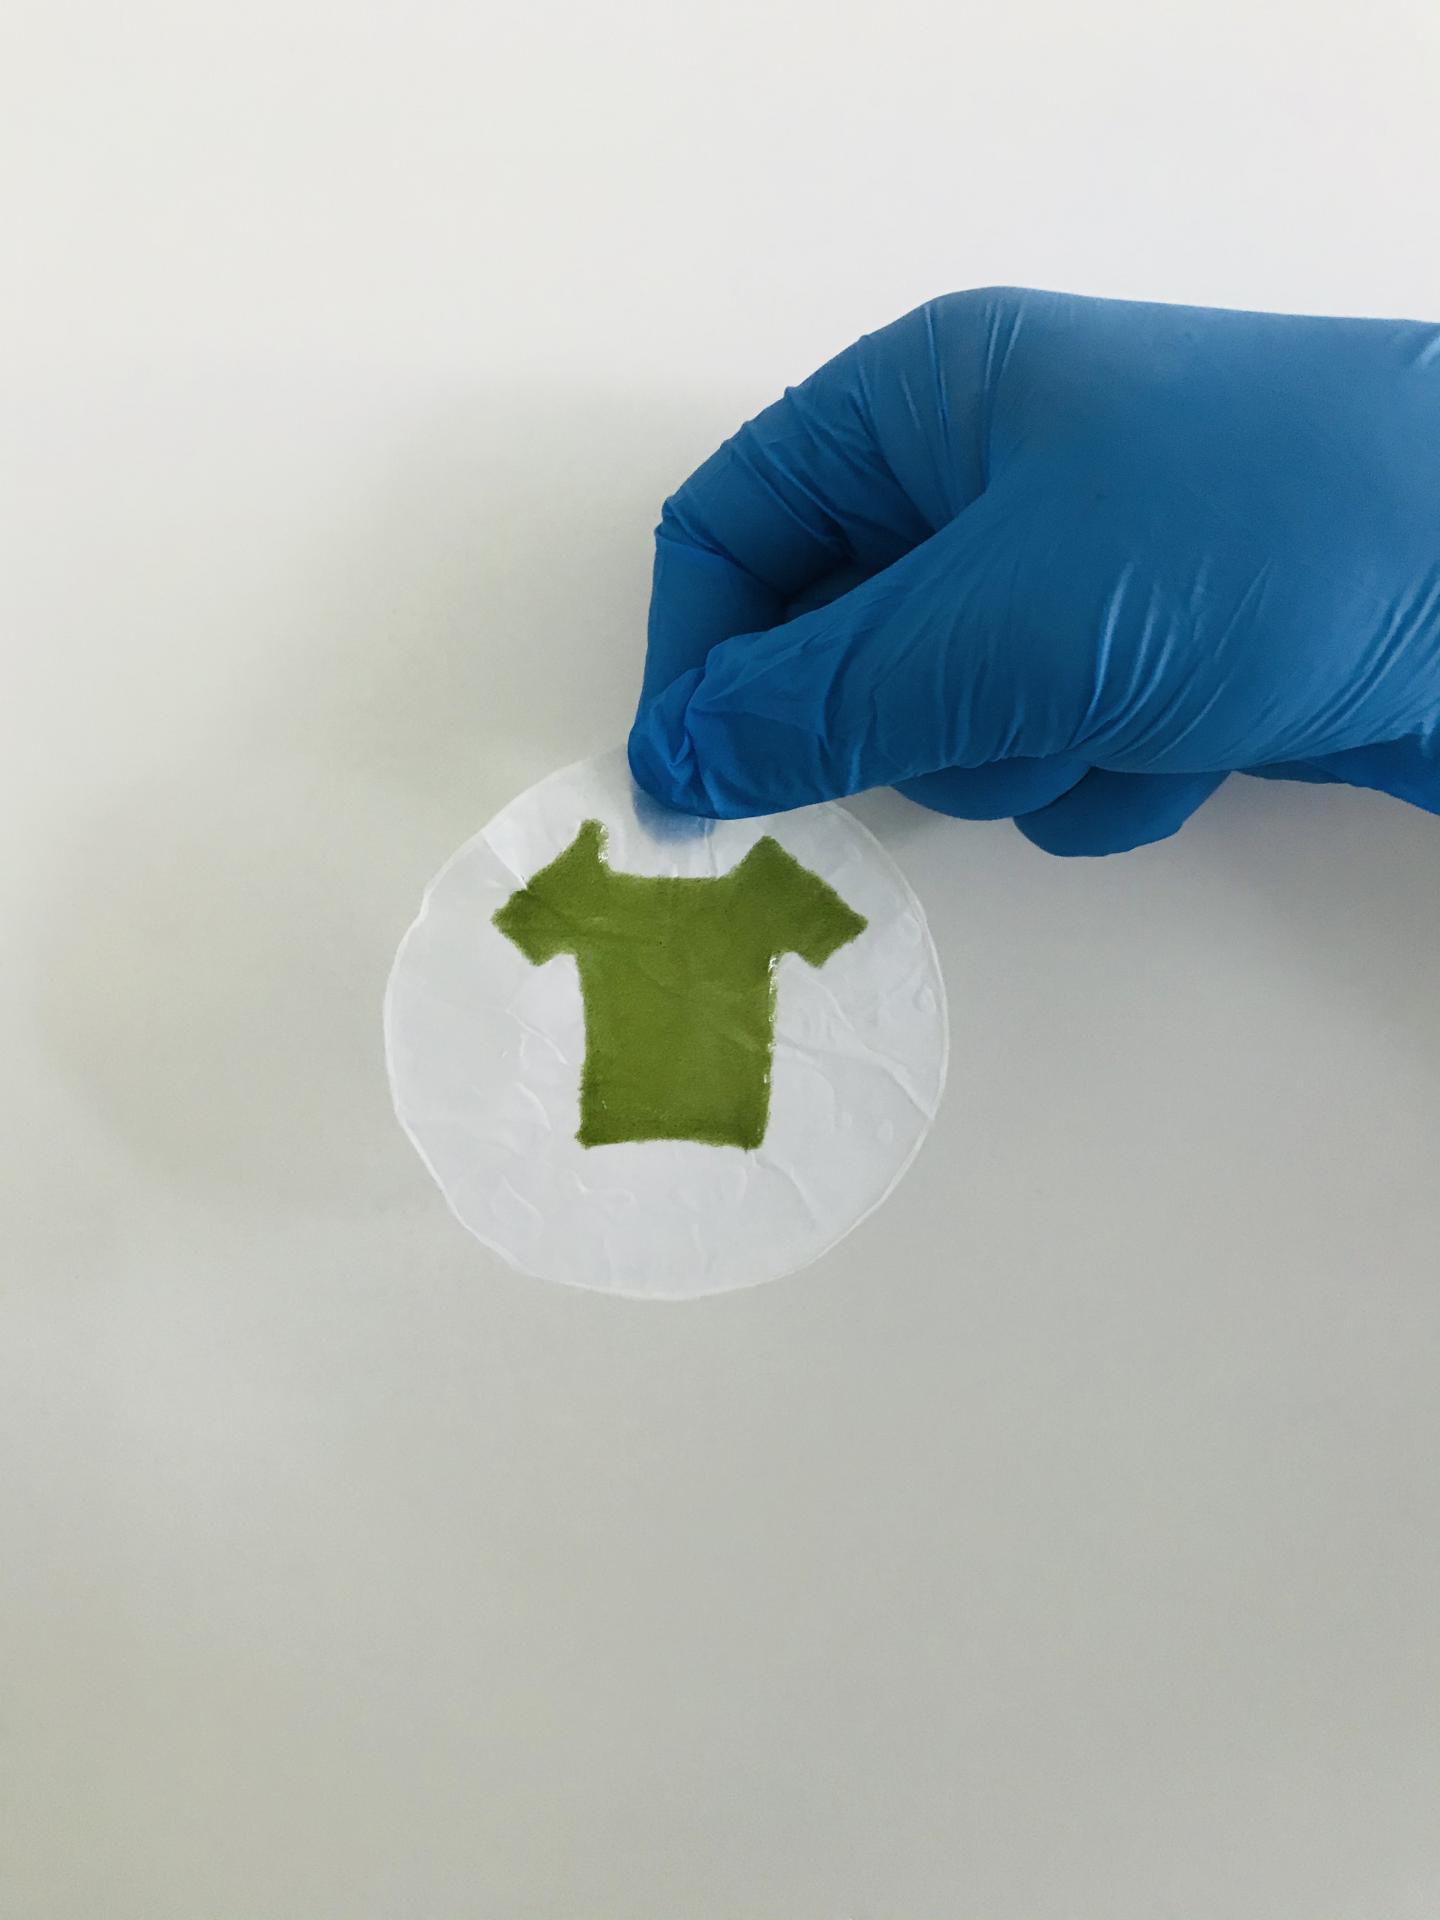 Mini t-shirt made of algae